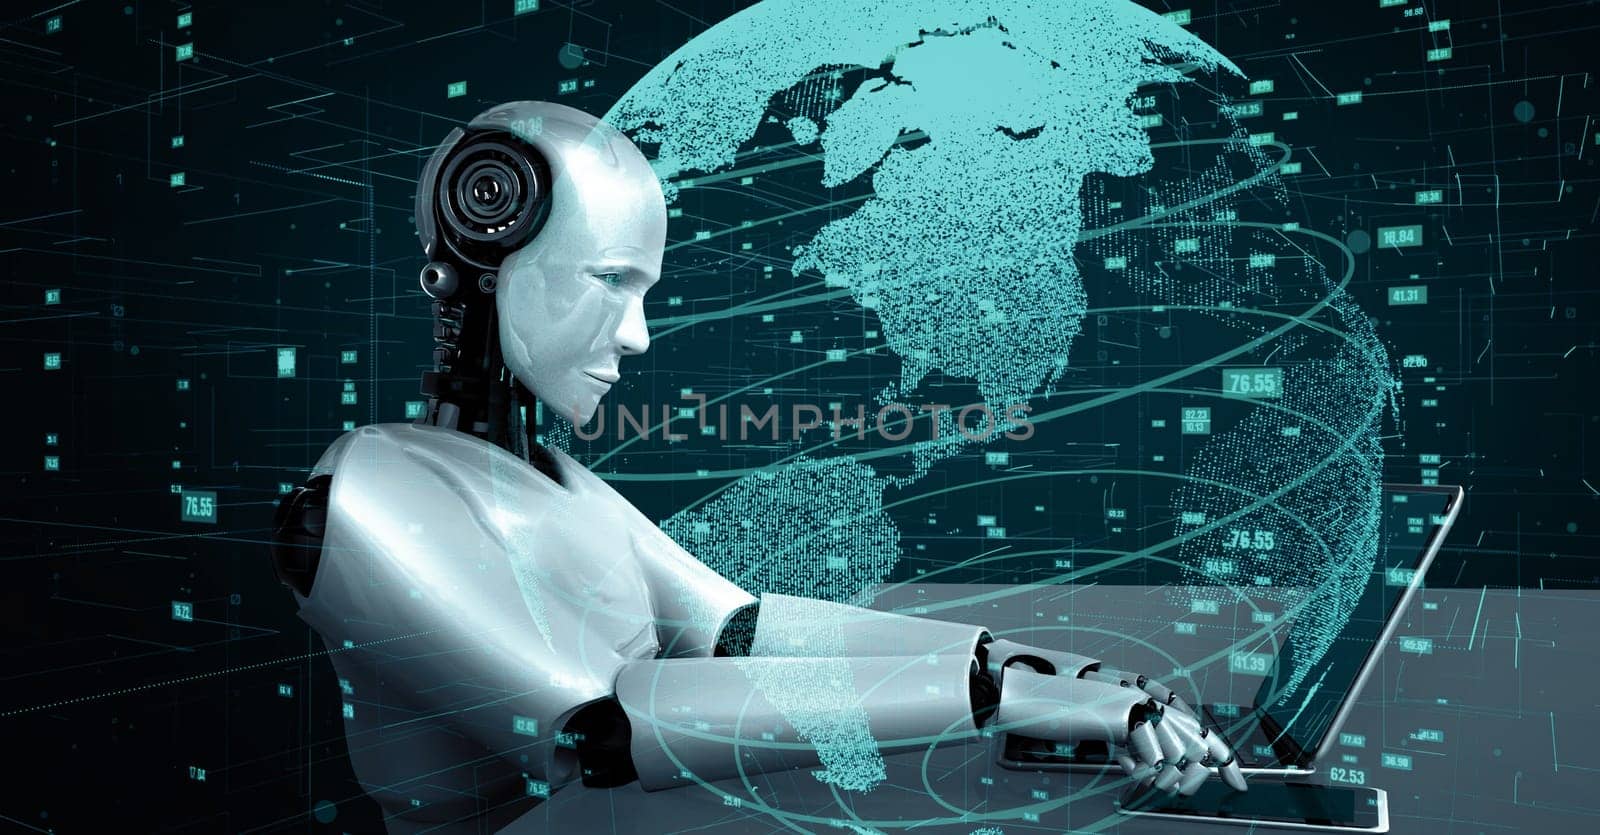 XAI Futuristic robot artificial intelligence huminoid AI data analytic technology by biancoblue